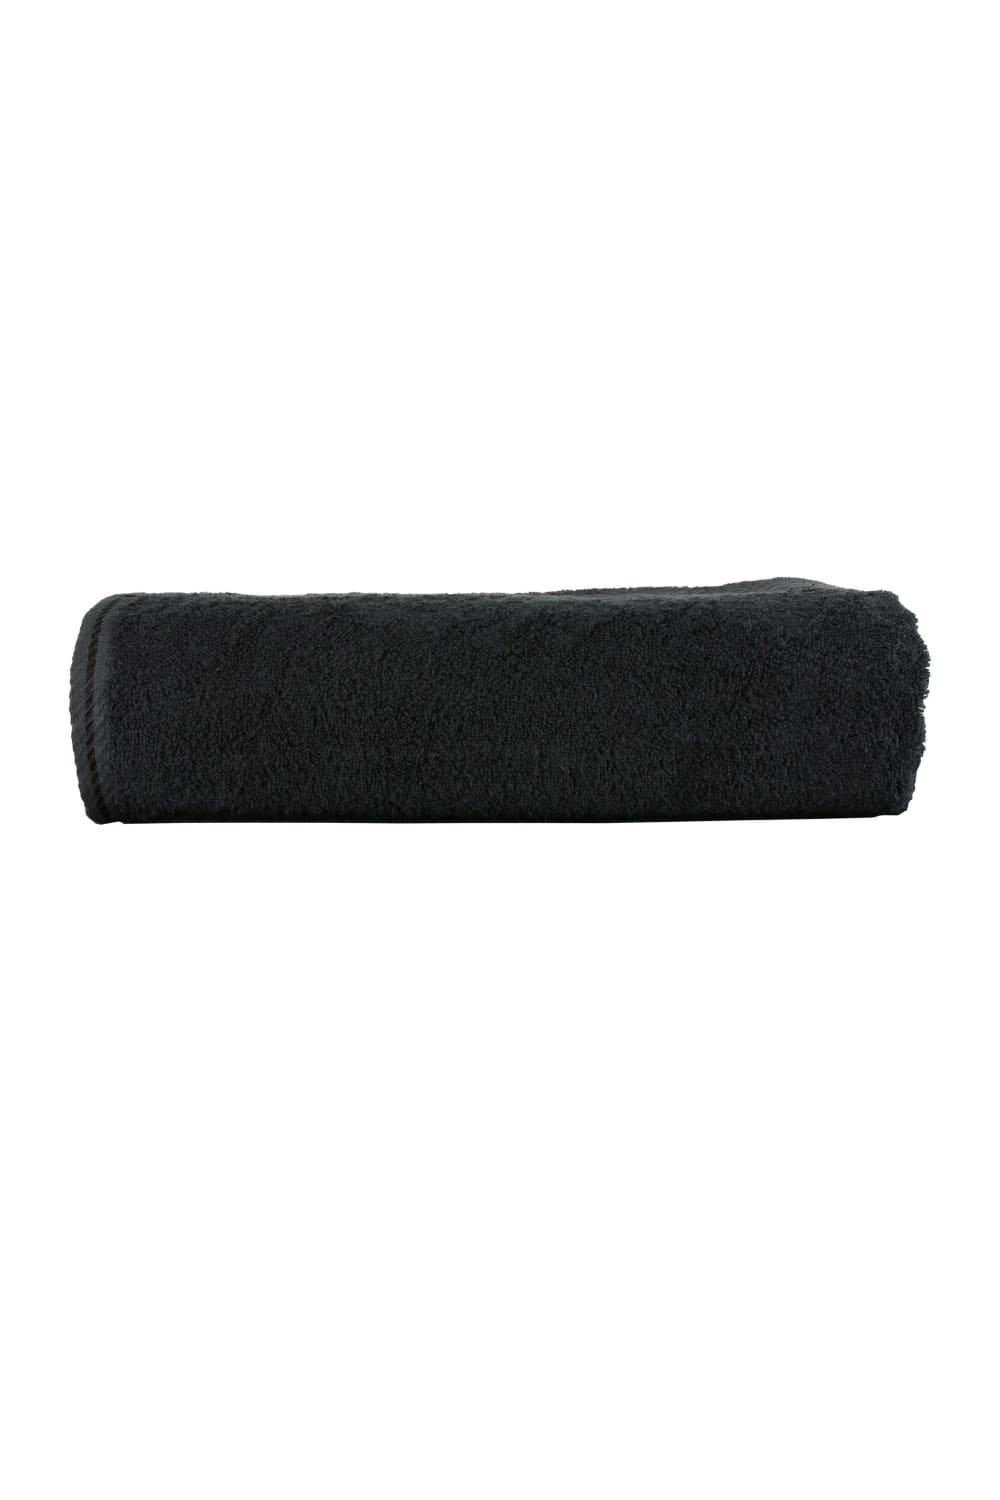 A&R Towels Ultra Soft Big Towel (Black) (One Size)